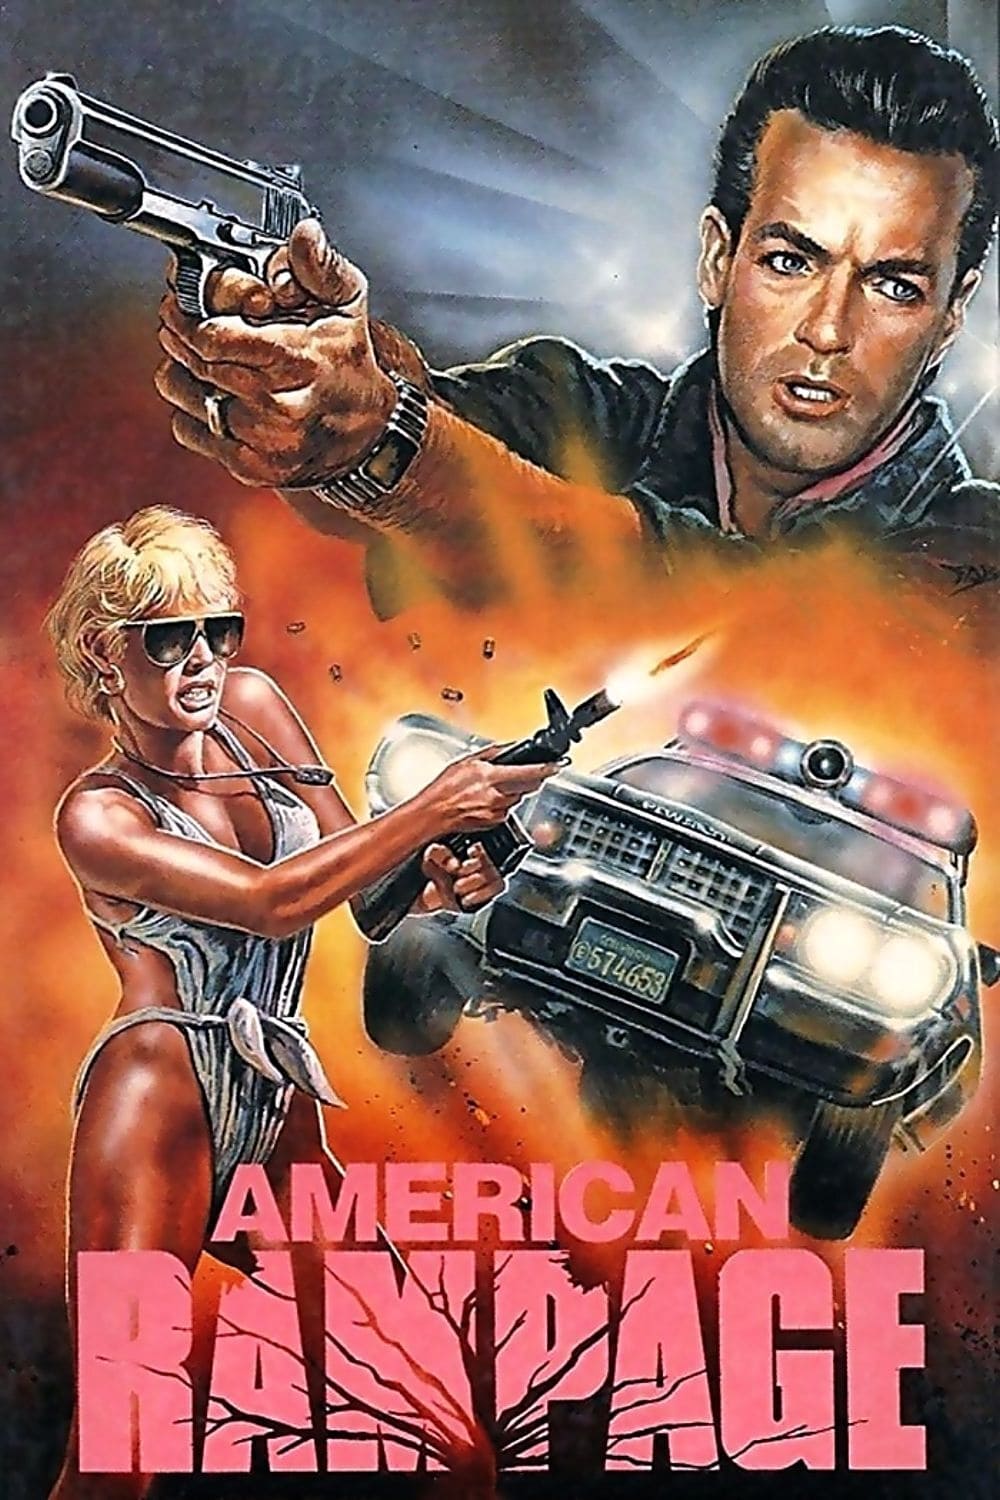 American Rampage (1989)